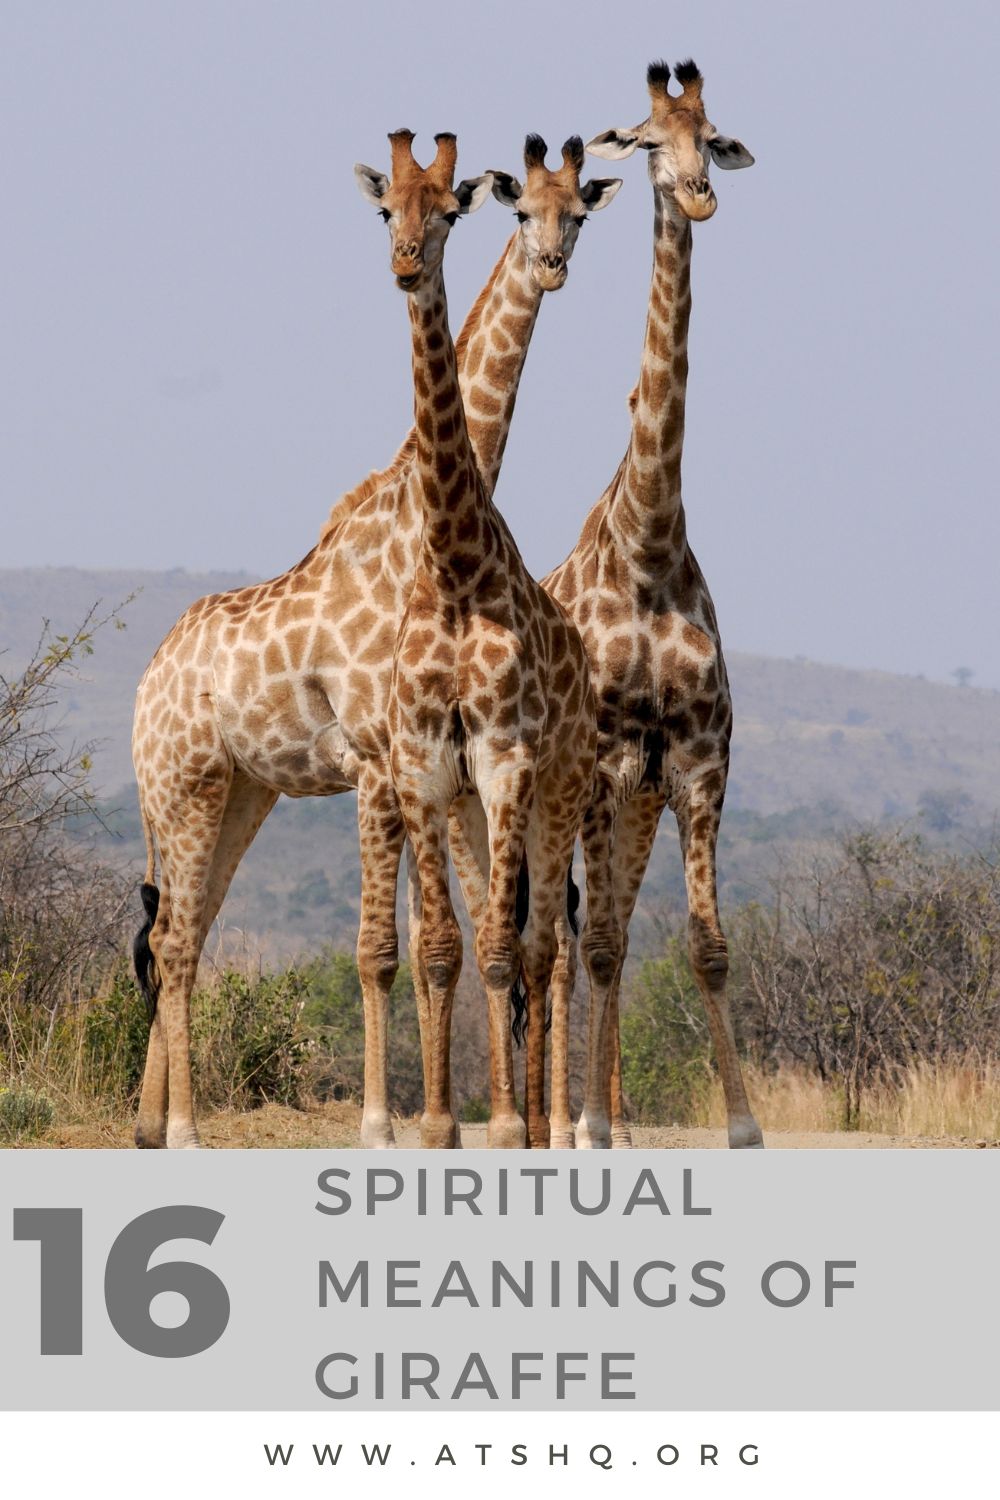 16 Spiritual Meanings Of Giraffe